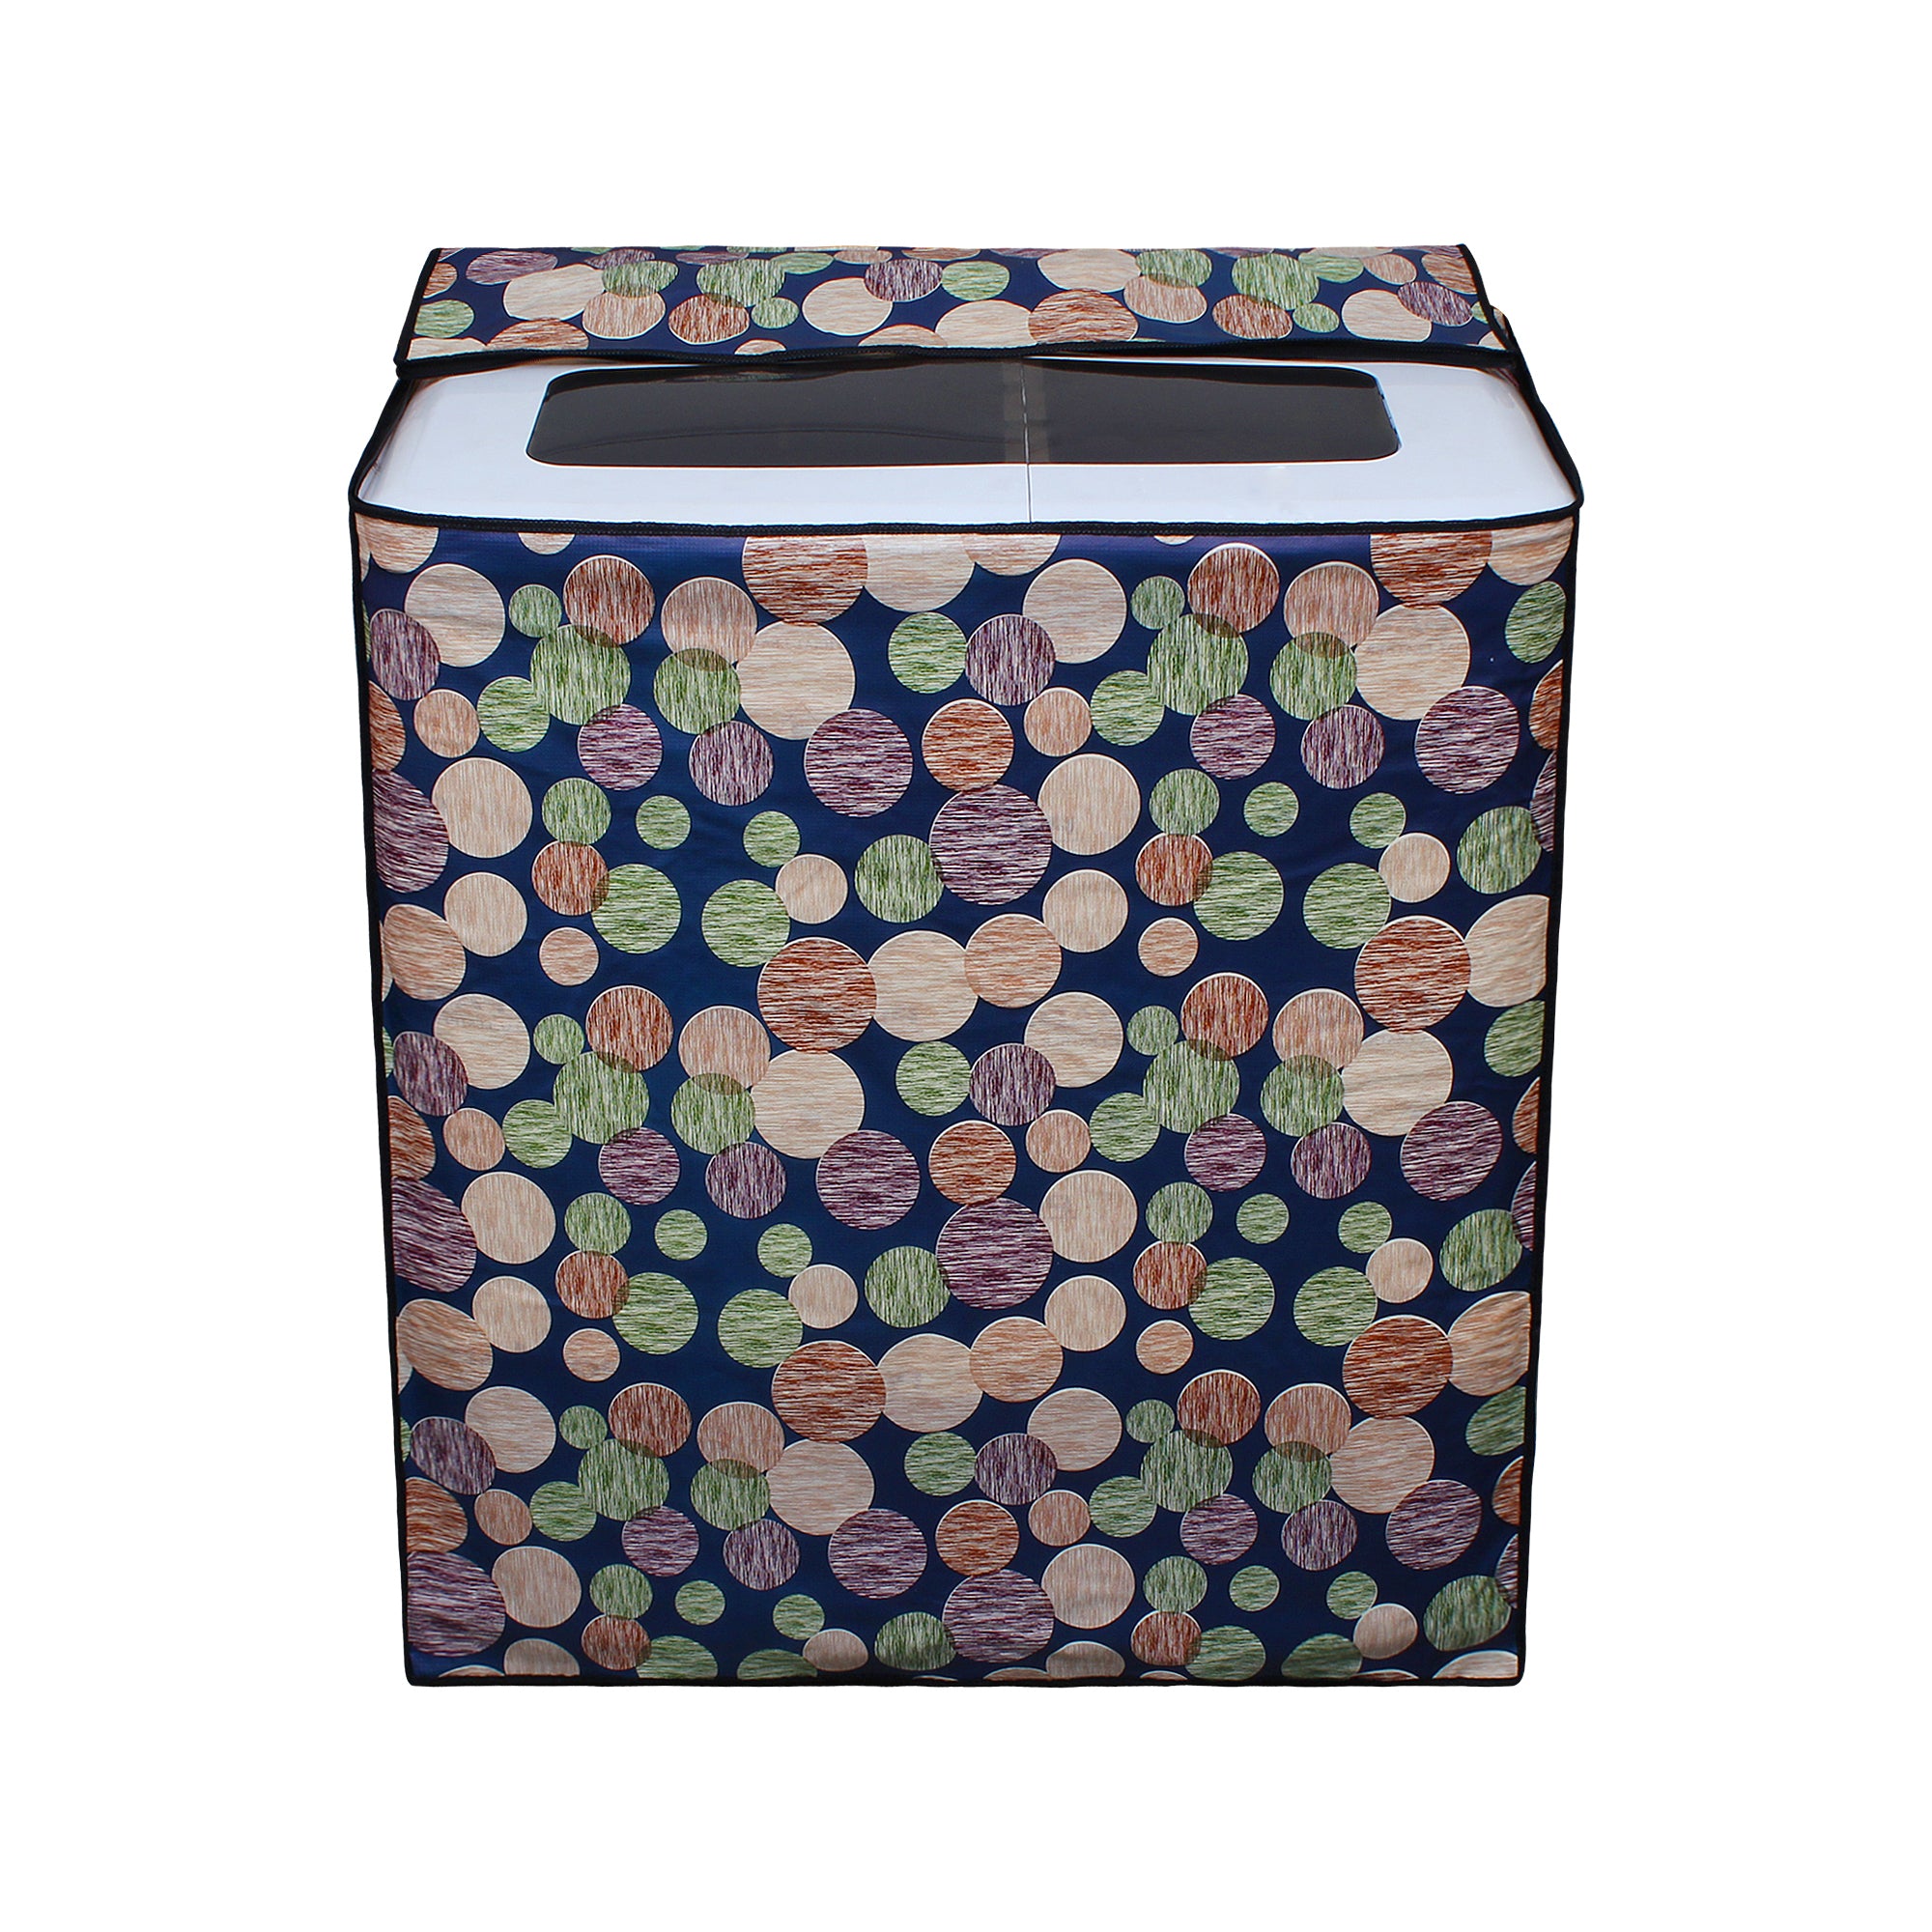 Semi Automatic Washing Machine Cover, SA71 - Dream Care Furnishings Private Limited